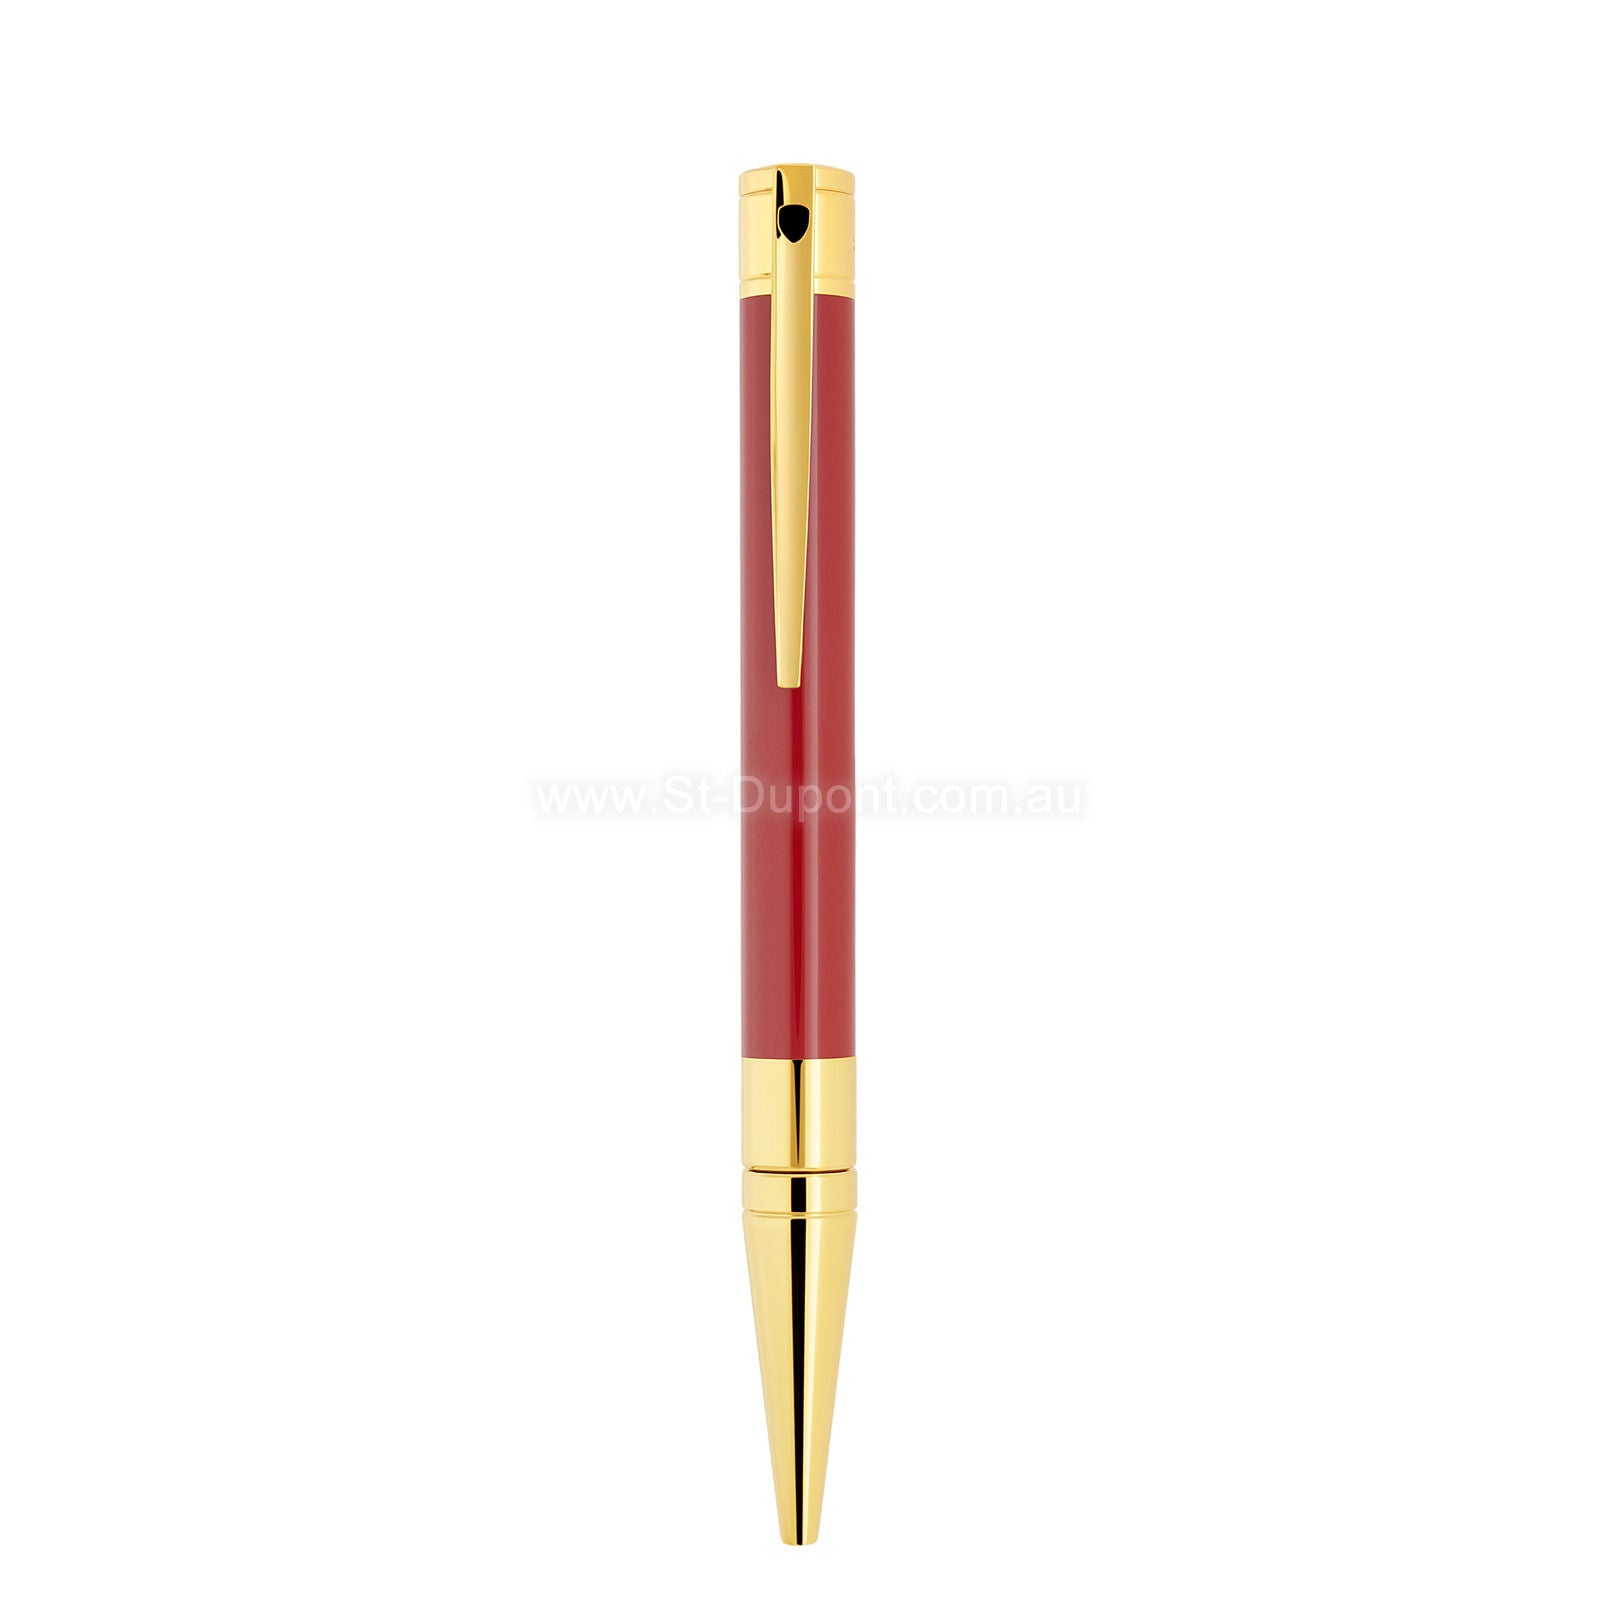 D Initial Ballpoint pen Dragon Red